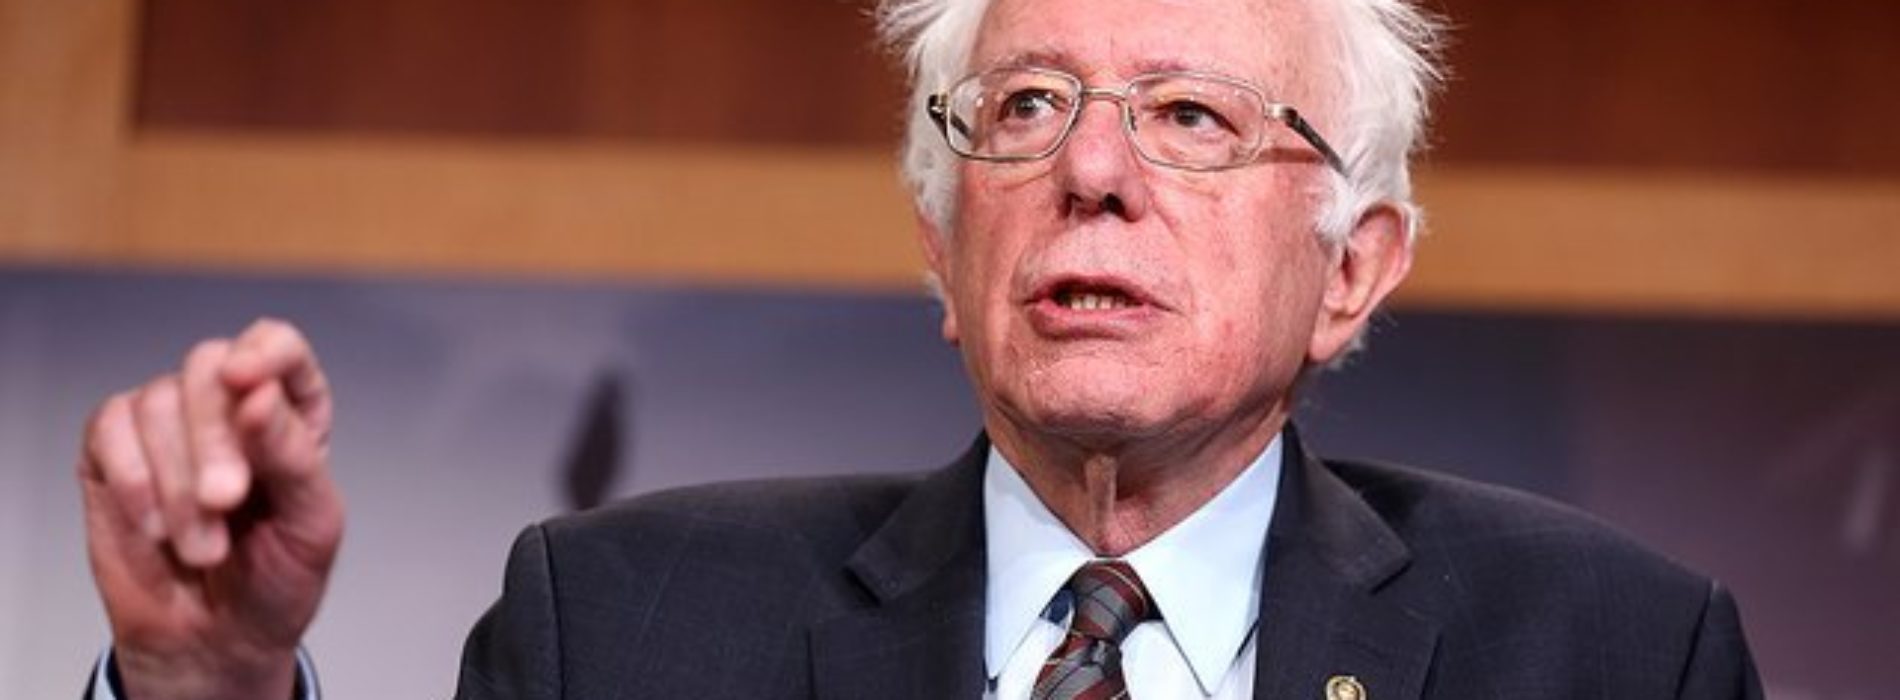 Sanders to Cut Prescription Drug Prices in Half